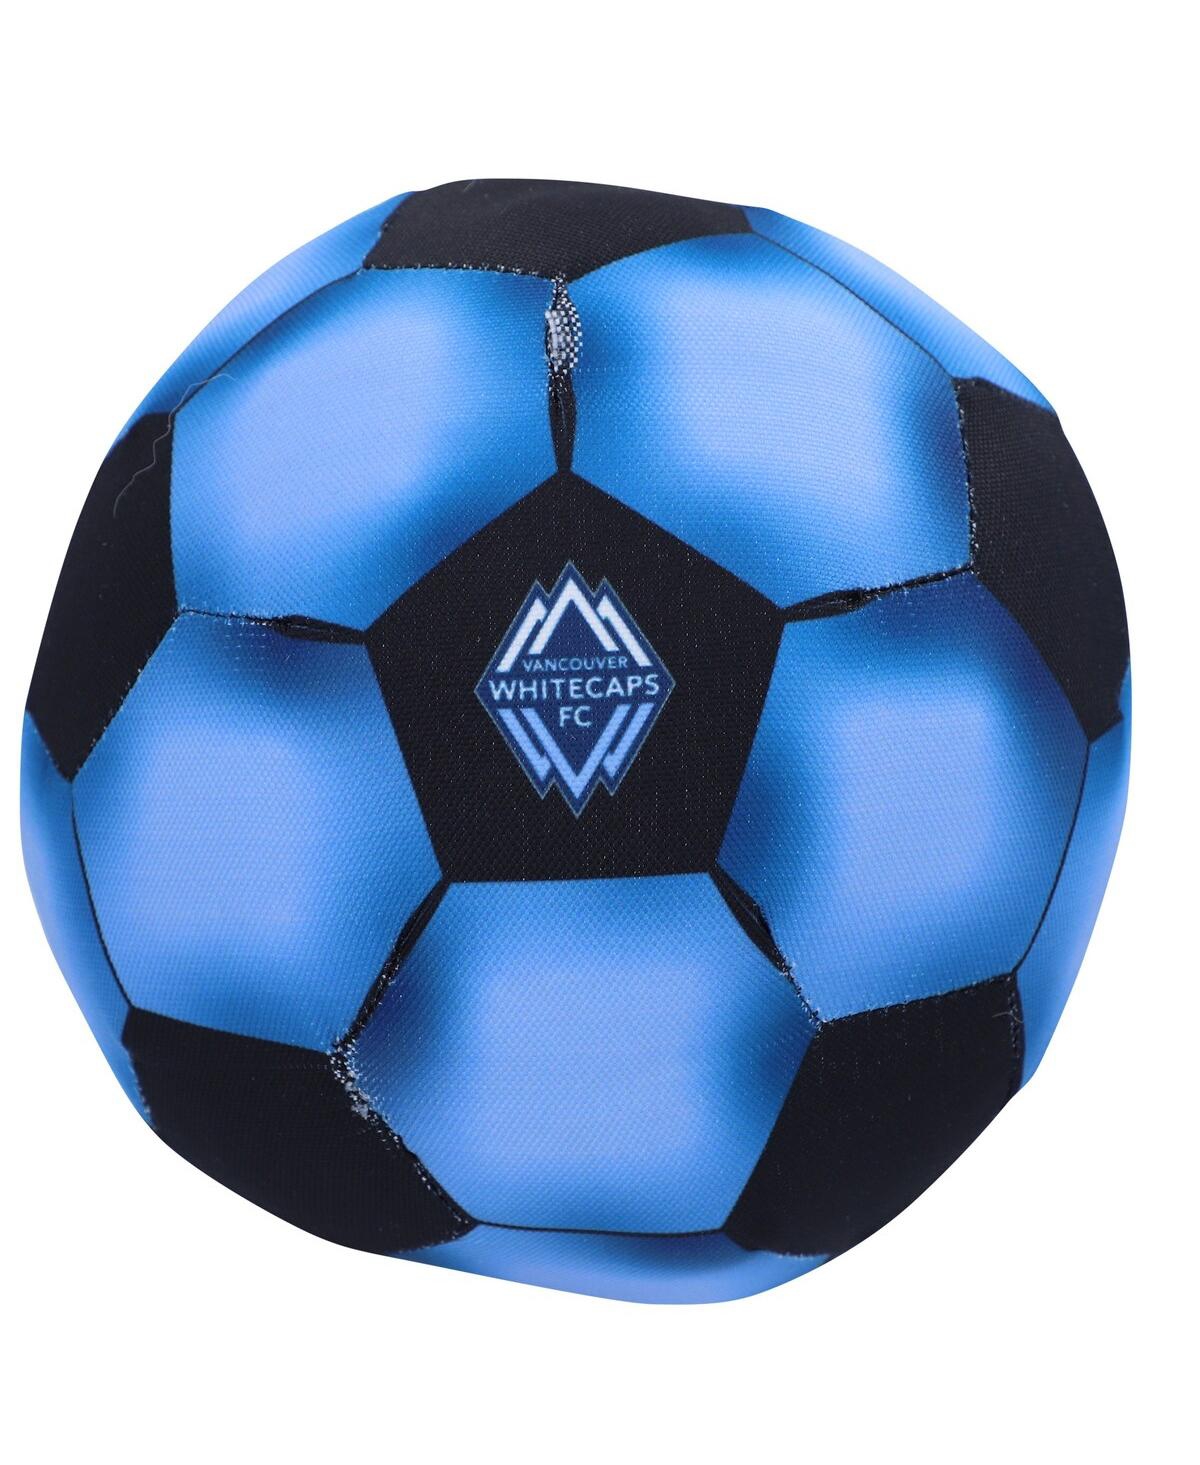 Vancouver Whitecaps Fc Soccer Ball Plush Dog Toy - Blue